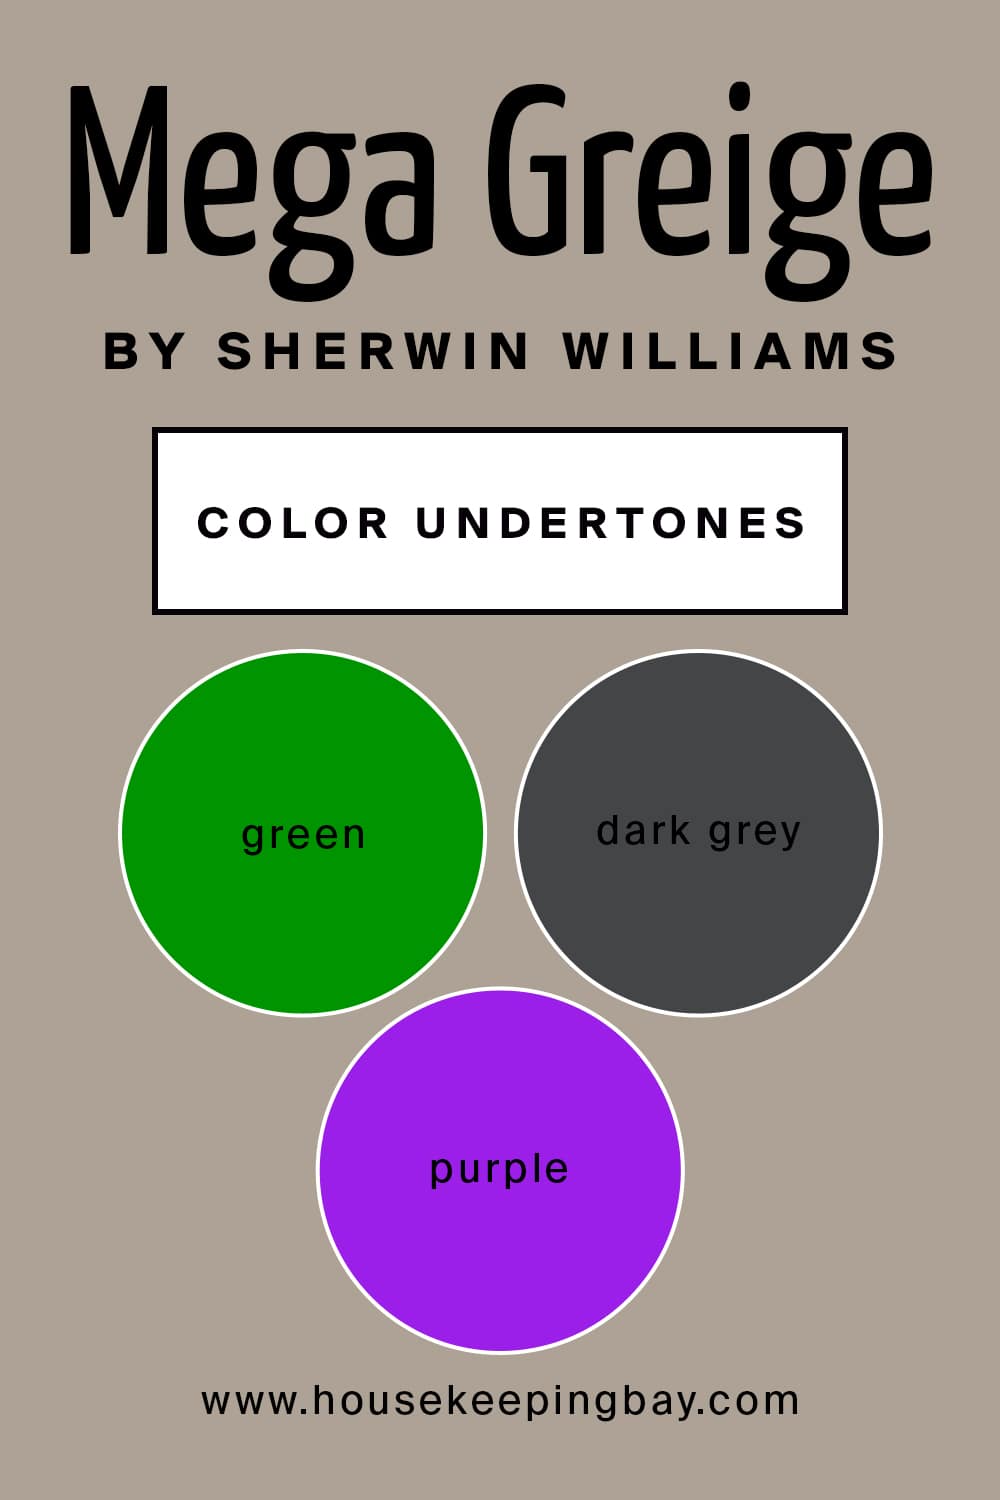 Mega Greige by Sherwin Williams Color Undertones